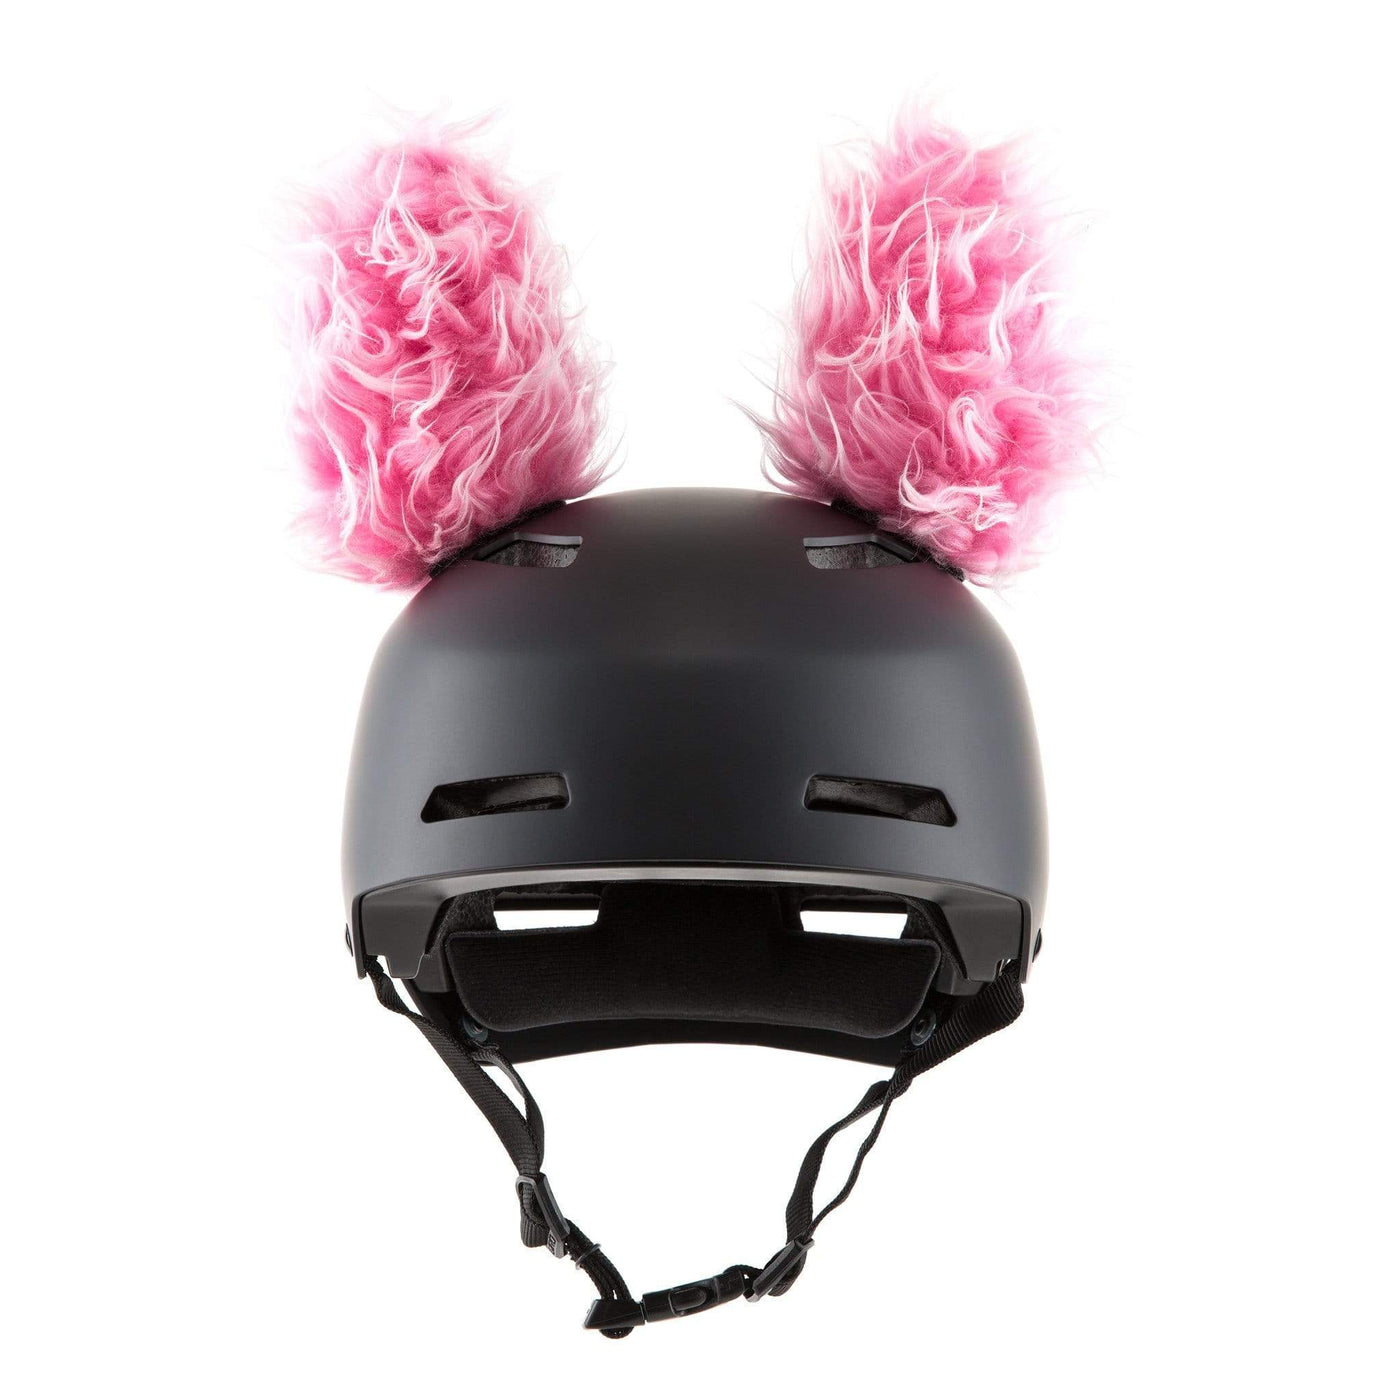 SnowKids Accessories Parawild Pink Feli the Lynx Helmet Ears